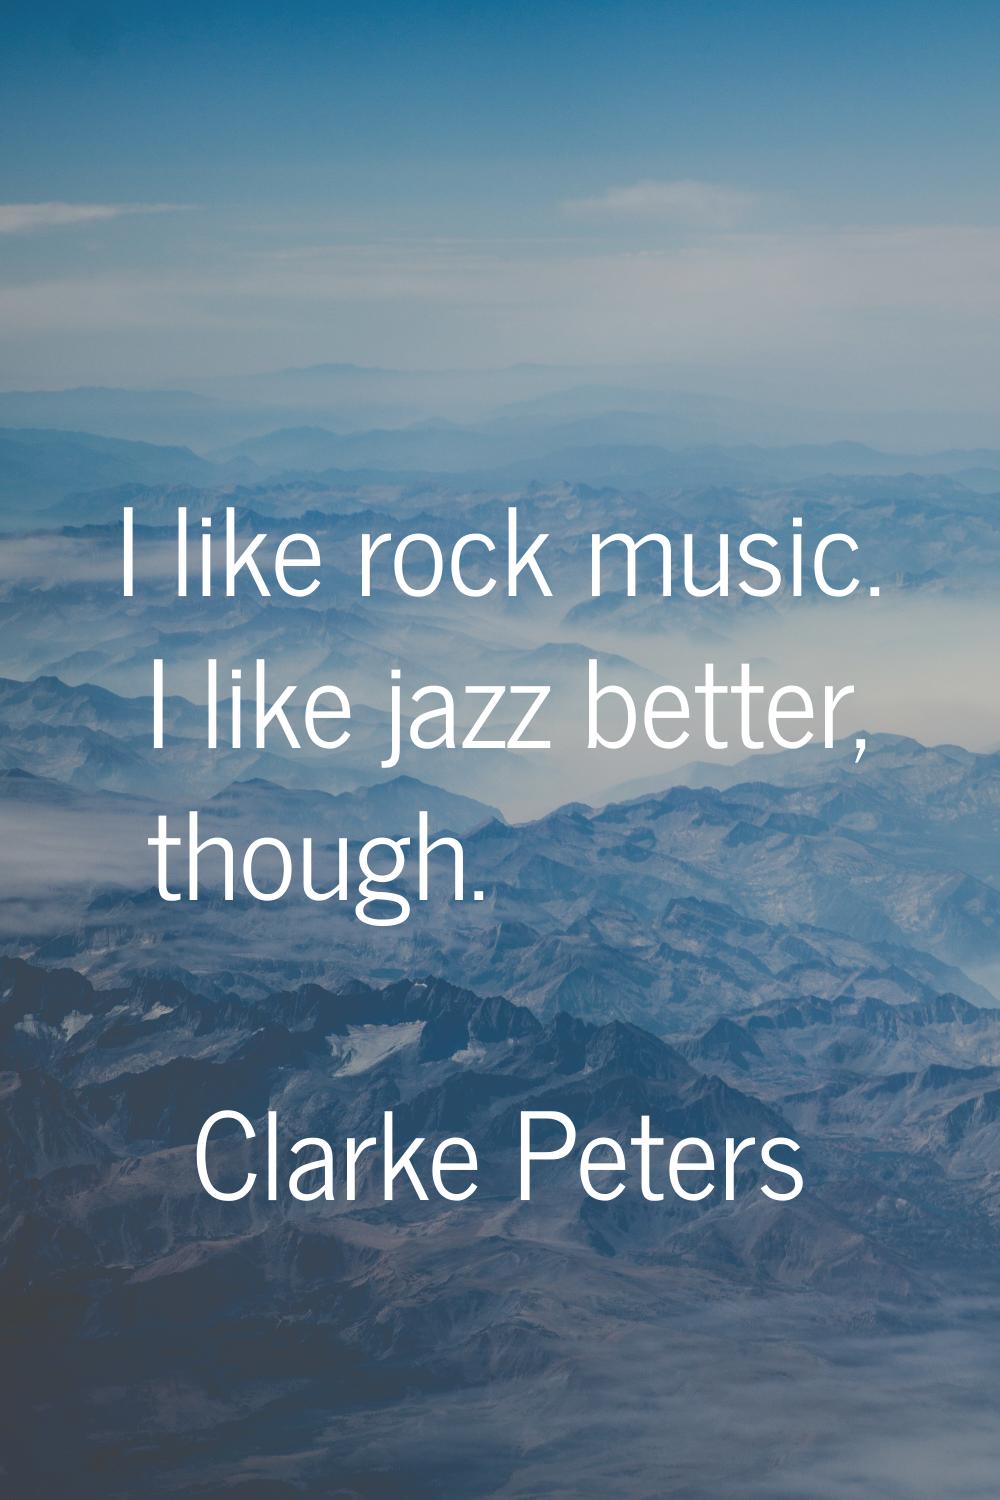 I like rock music. I like jazz better, though.